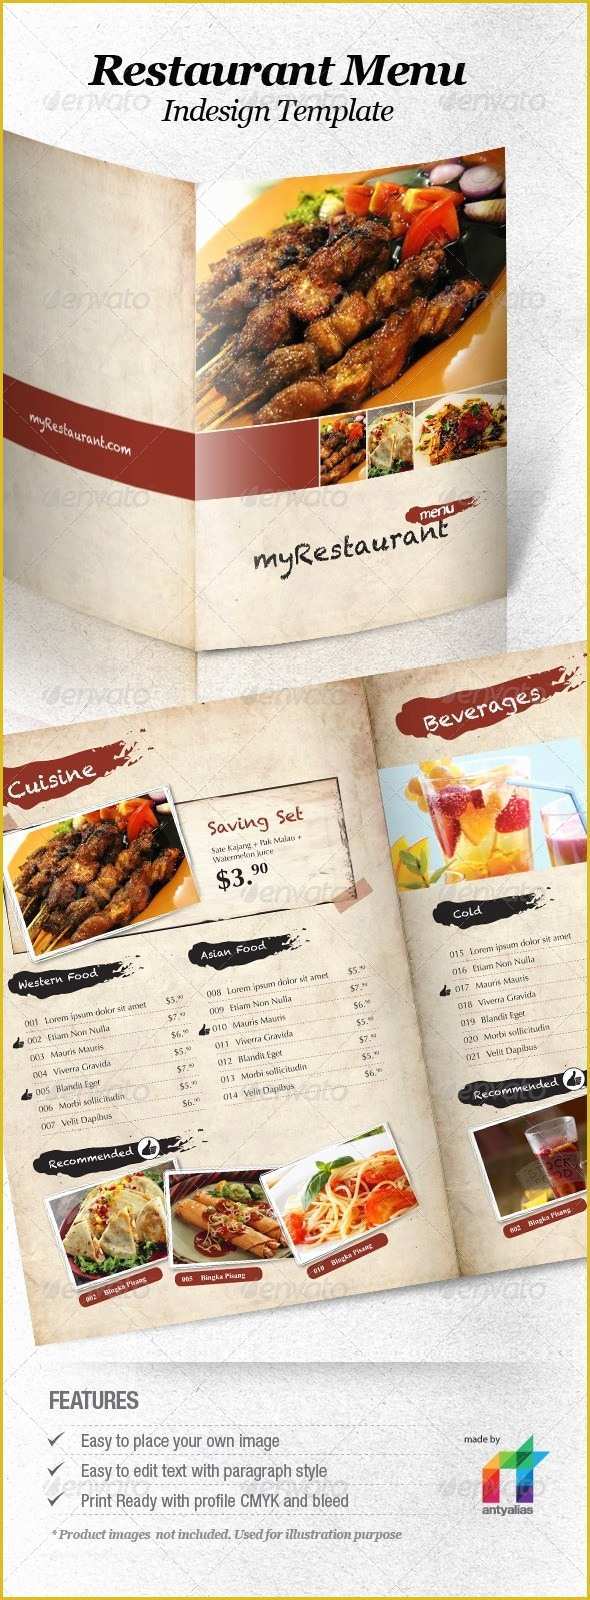 Menu Poster Template Free Of 40 Psd &amp; Indesign Food Menu Templates for Restaurants